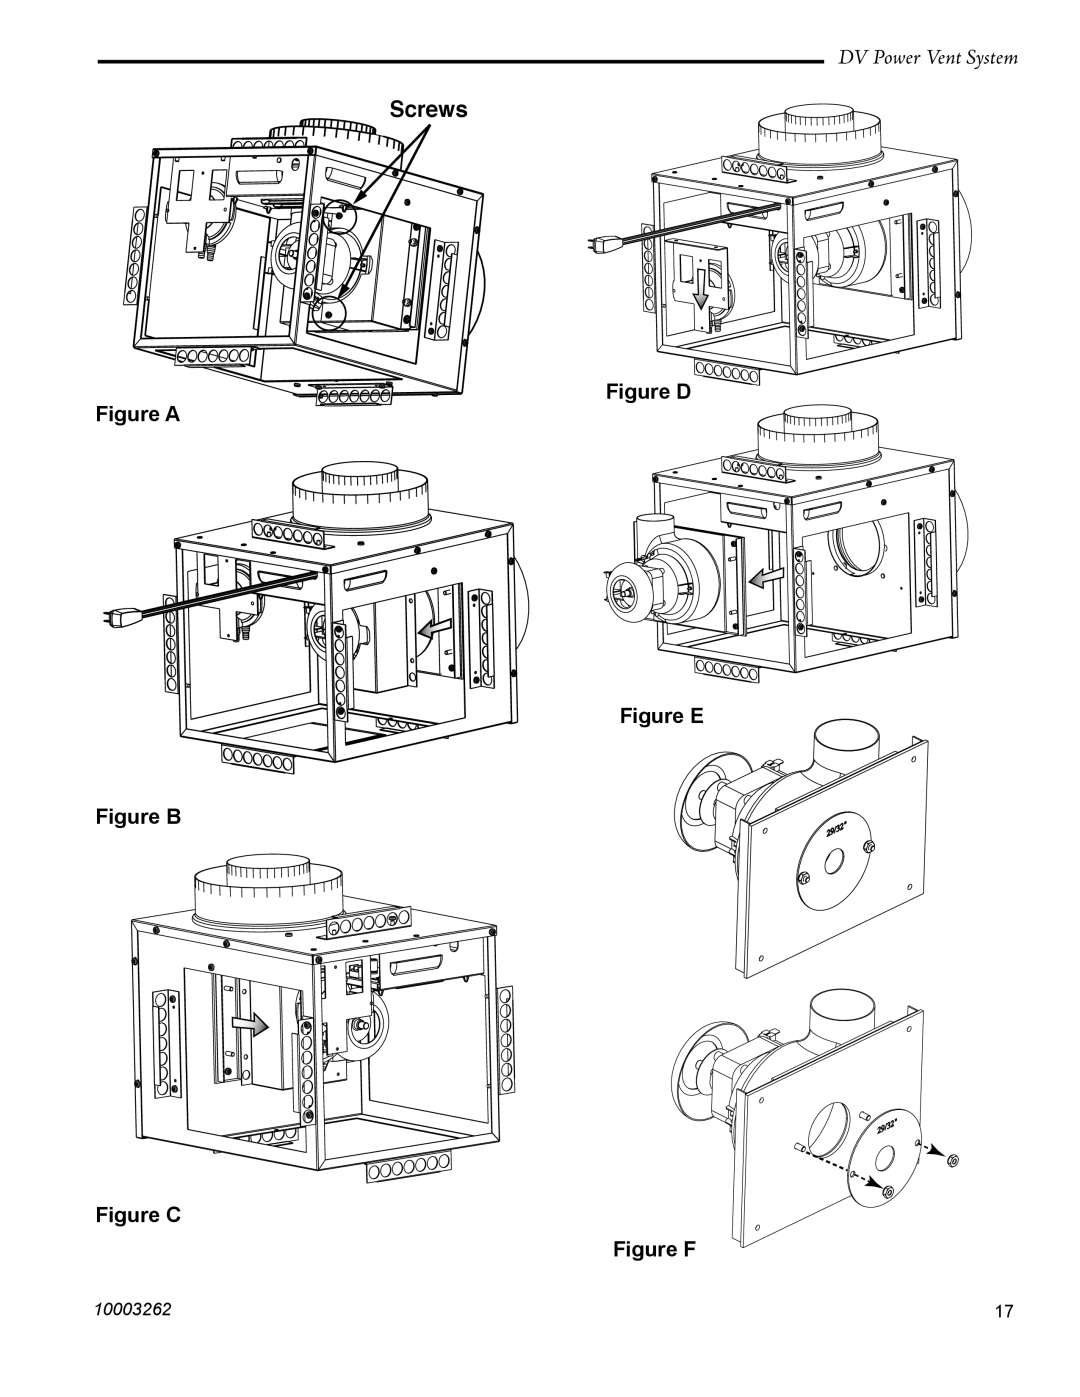 Vermont Casting 7PDVS manual Screws, DV Power Vent System, Figure D Figure A Figure E Figure B Figure C, Figure F, 10003262 